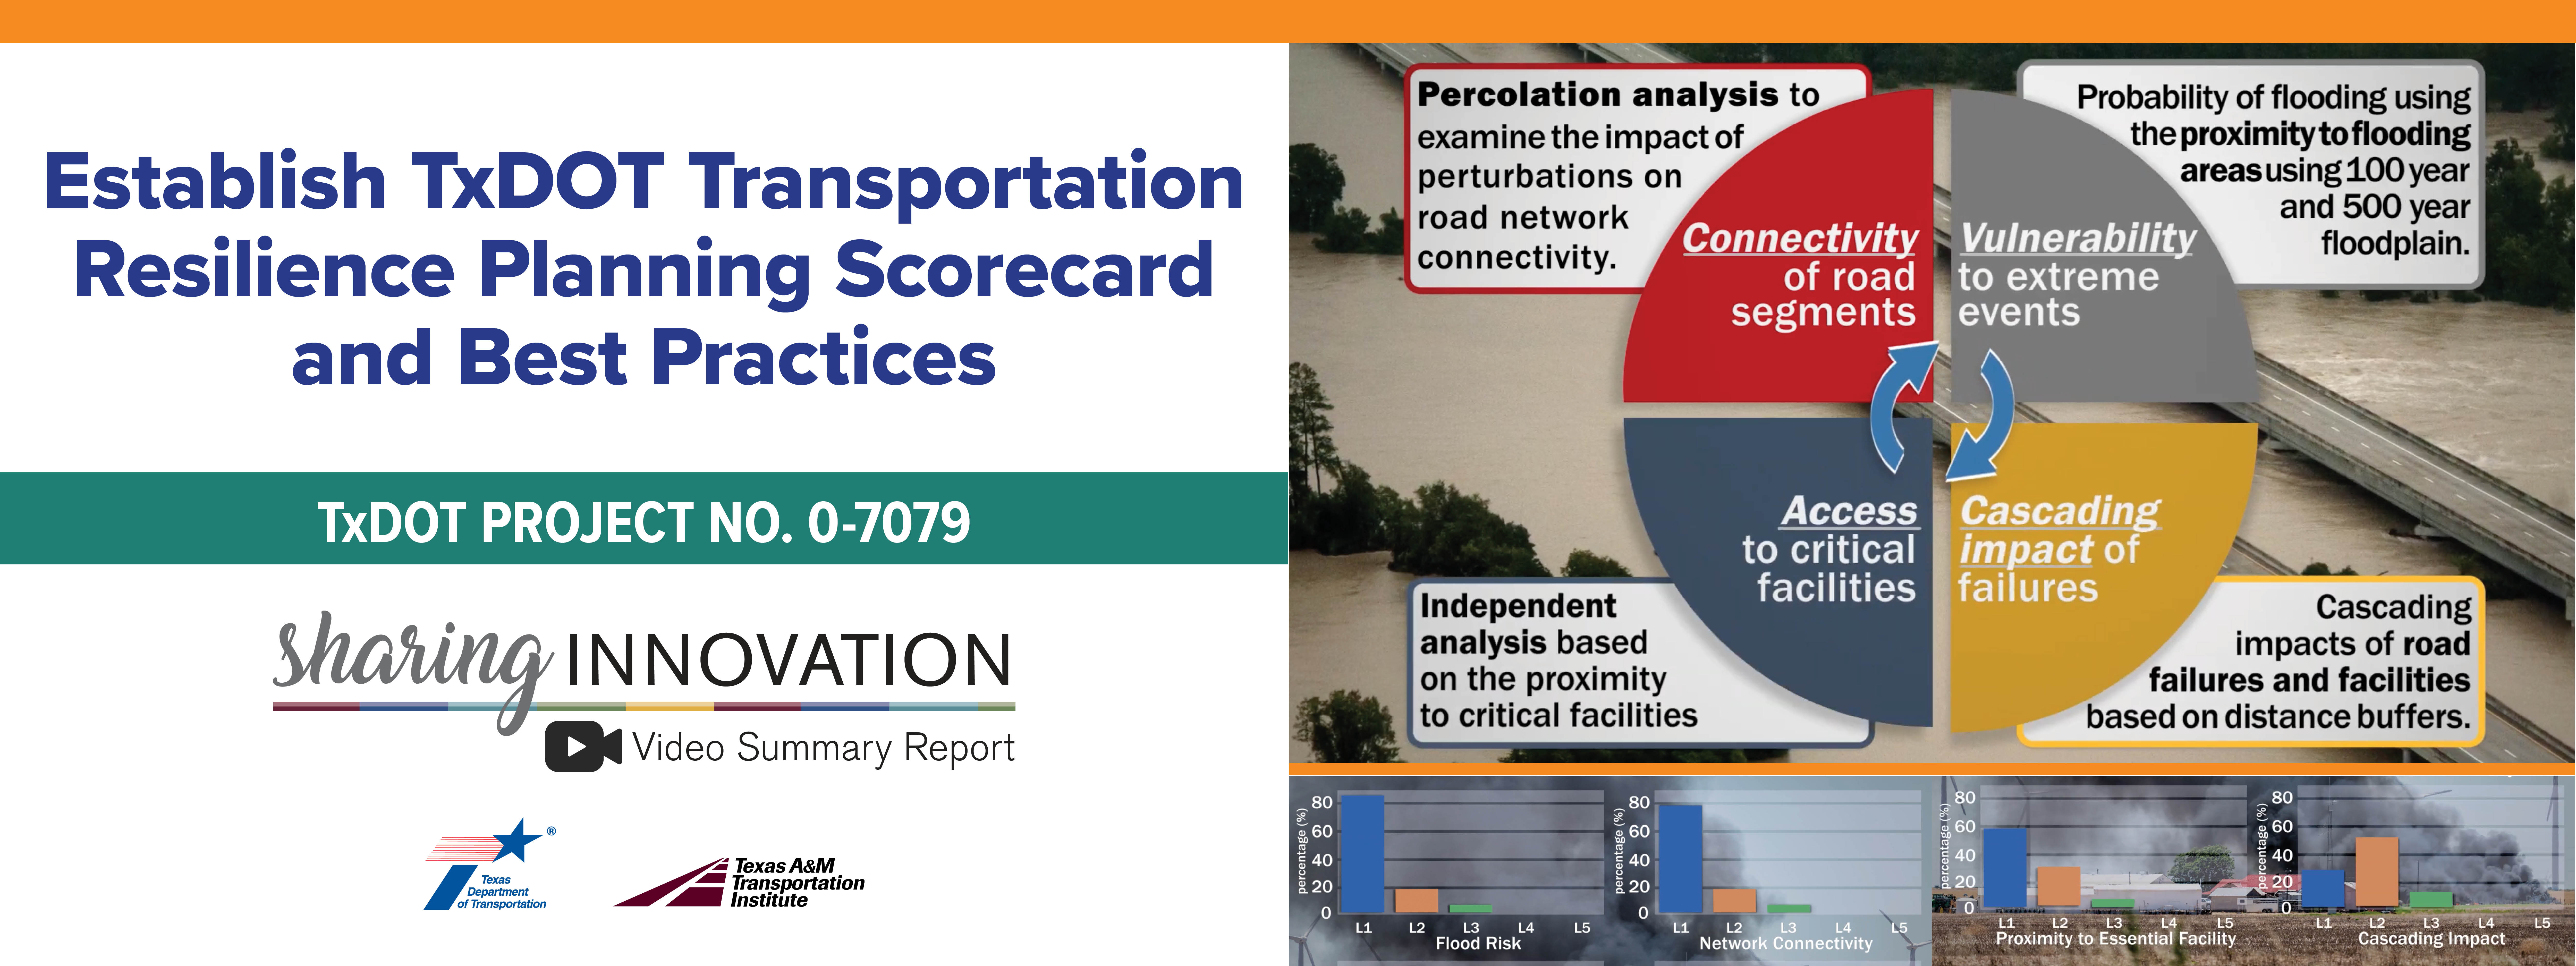 Sharing Innovation Video Summary Report: Establish TxDOT Transportation Resilience Planning Scorecard and Best Practices